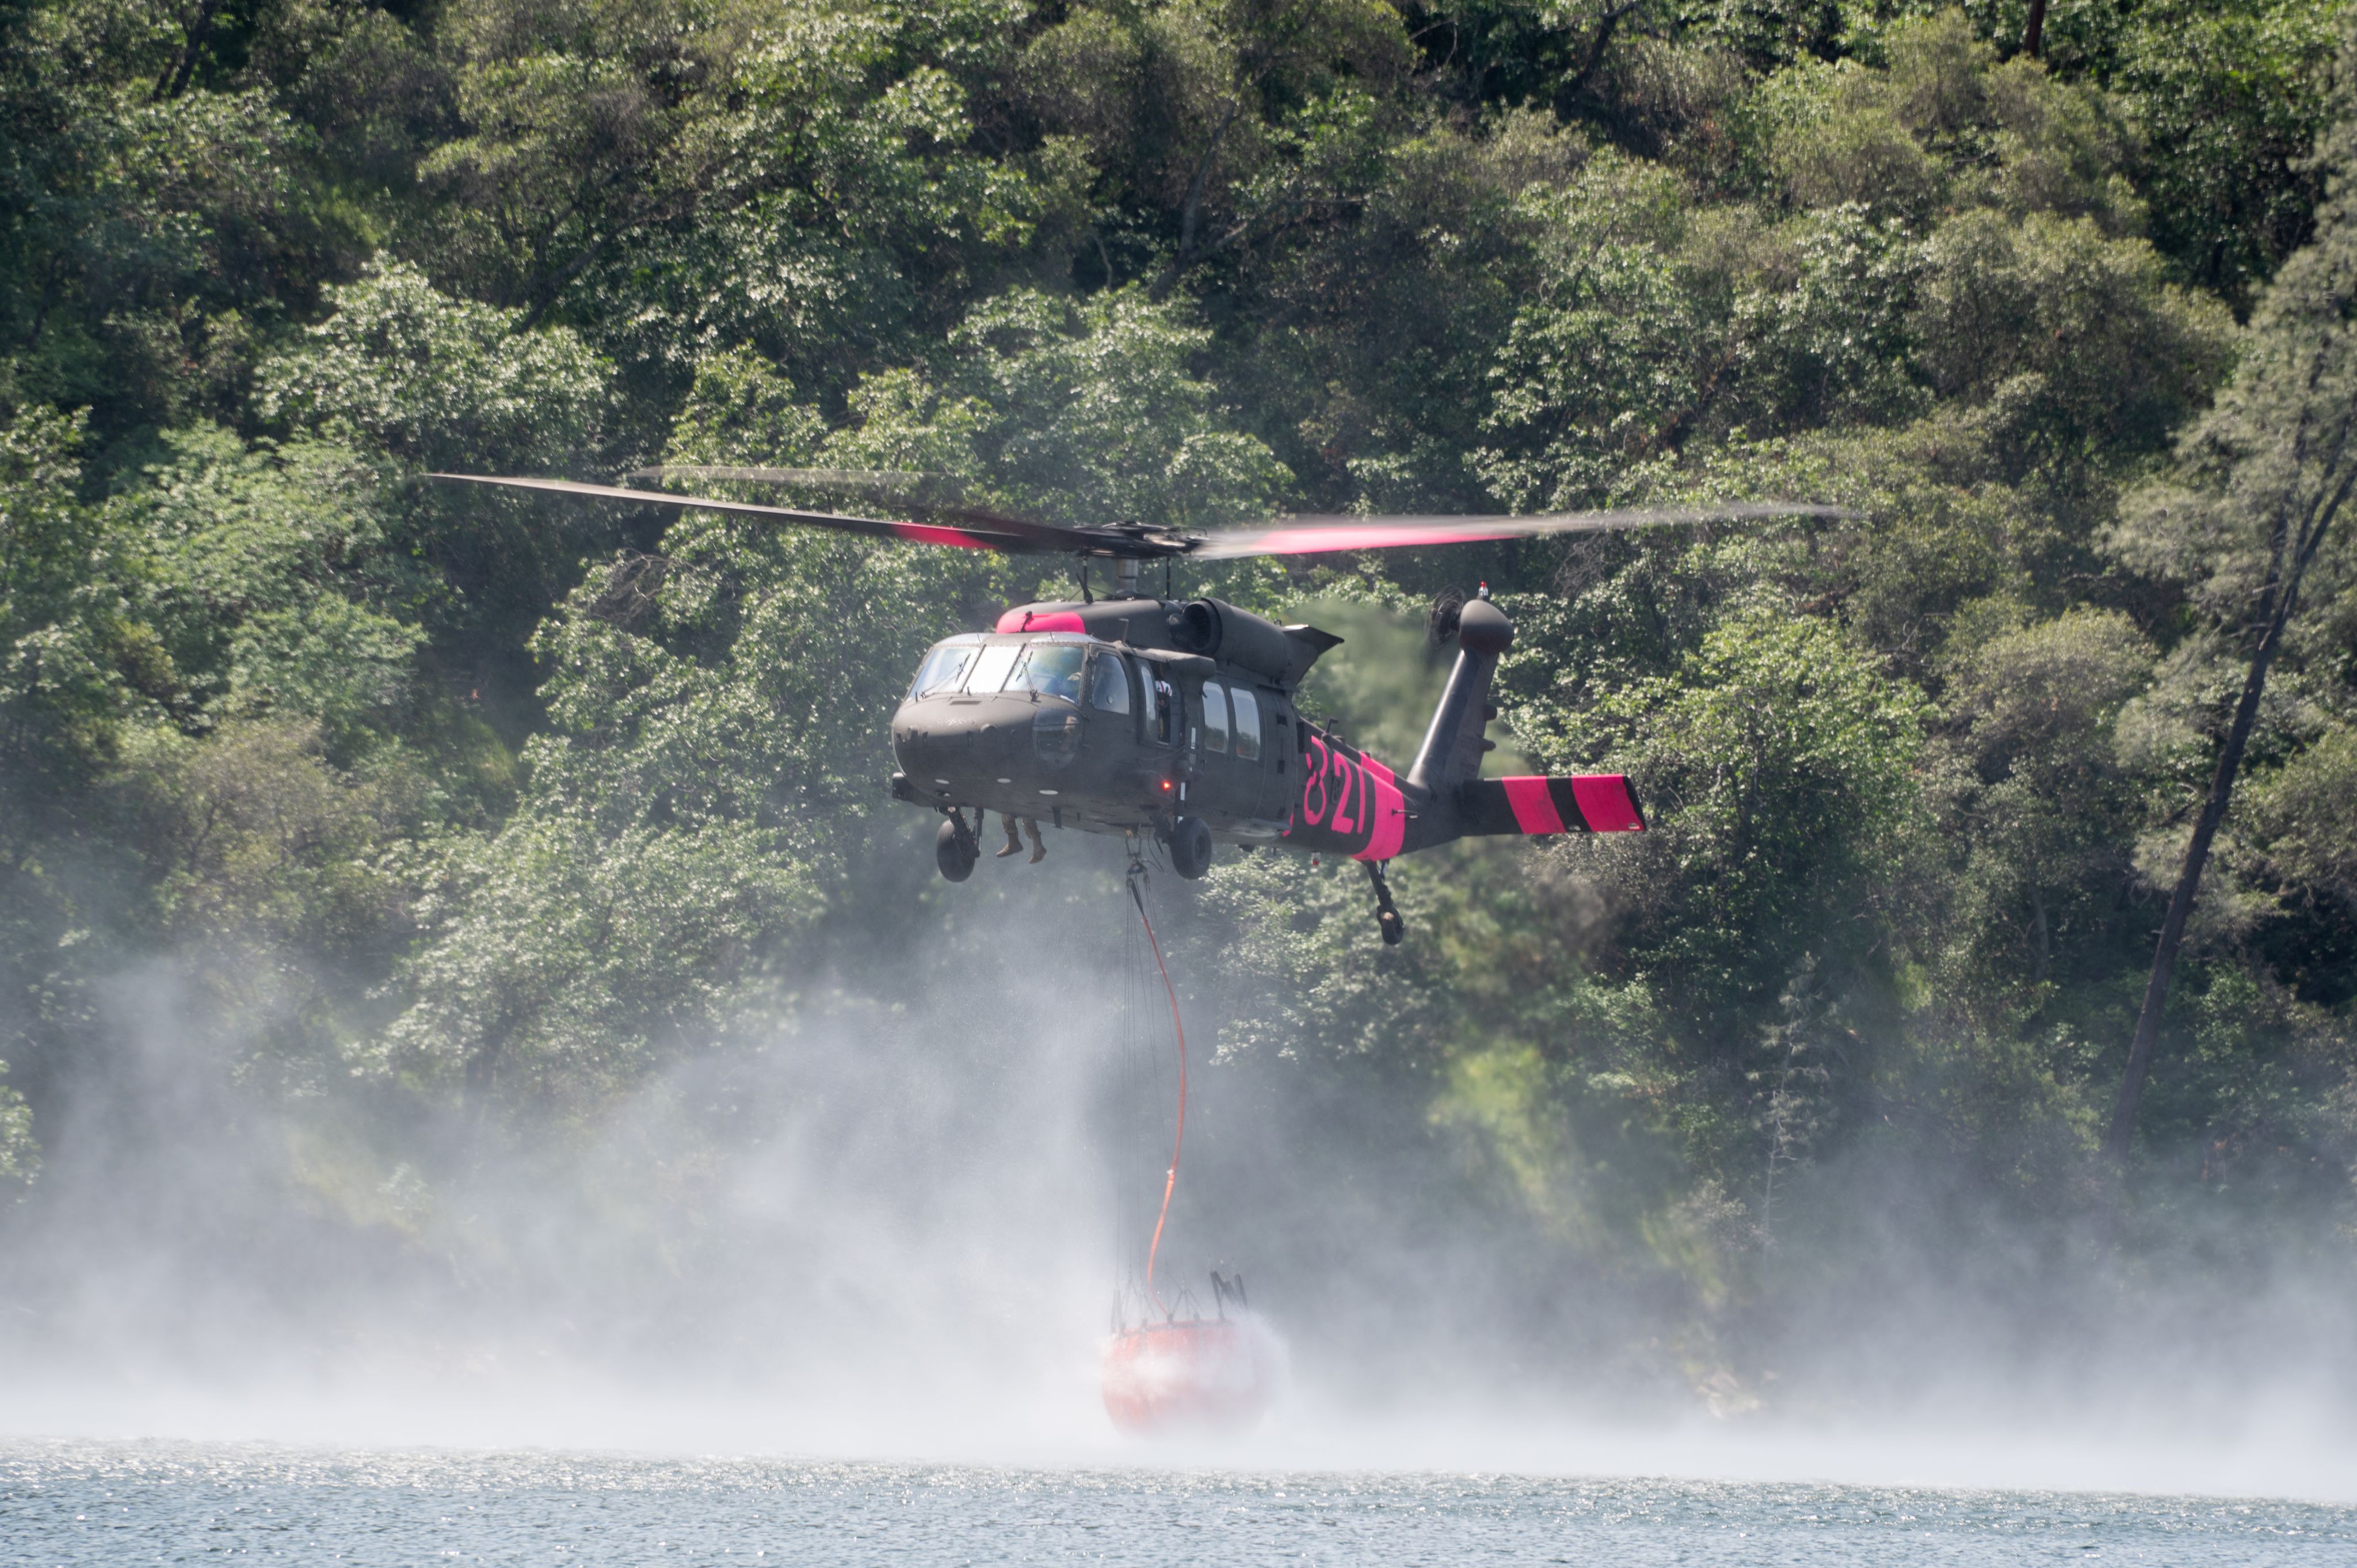 UH-60 Blackhawk helicopter lowering orange water bucket in lake